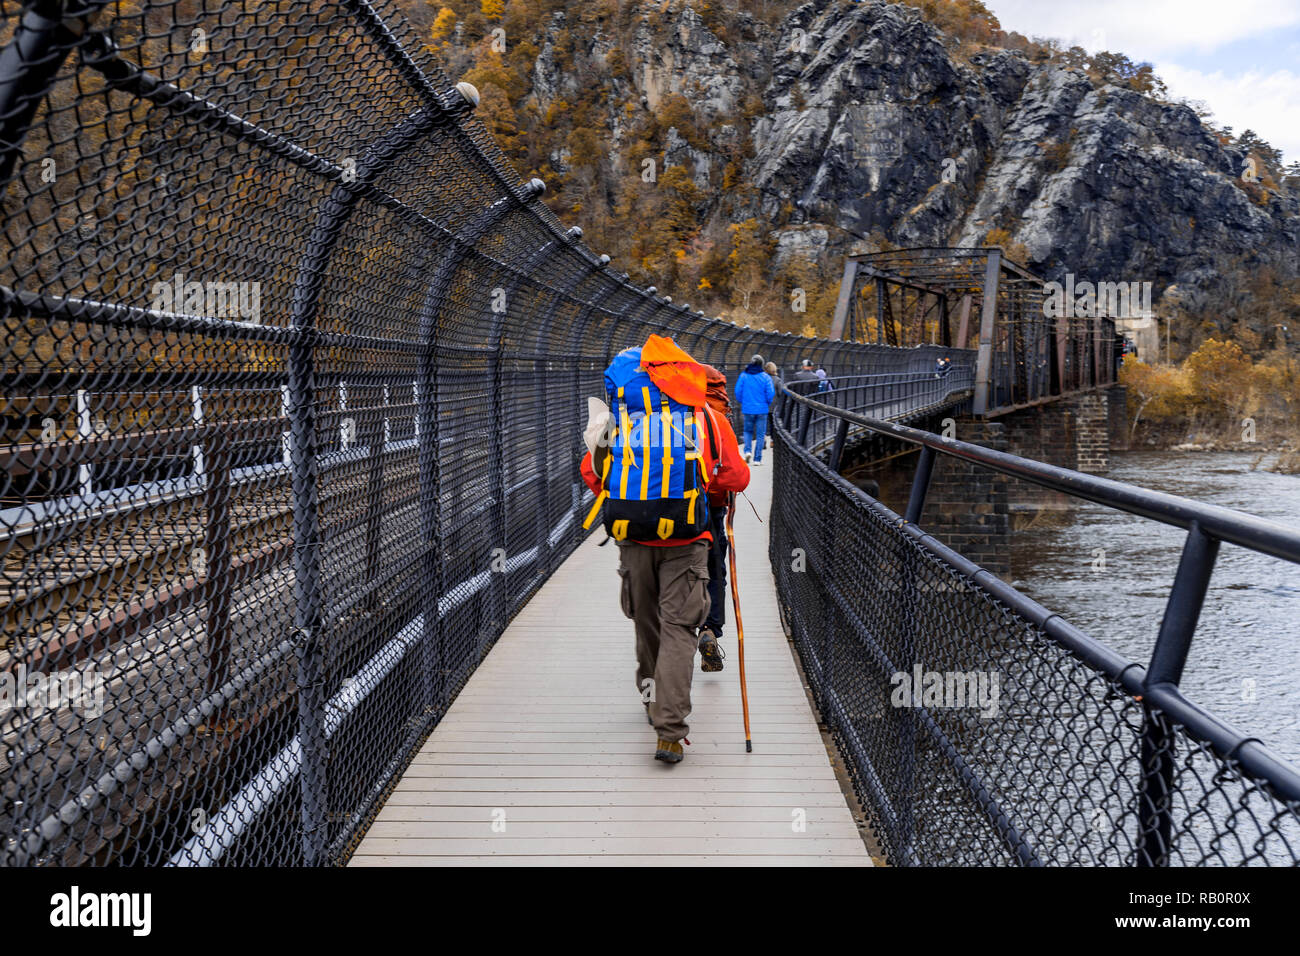 Harpers Ferry, WV, USA - November 3, 2018: Der Appalachian Trail, der Shenandoah River Crossing in Harpers Ferry. Stockfoto